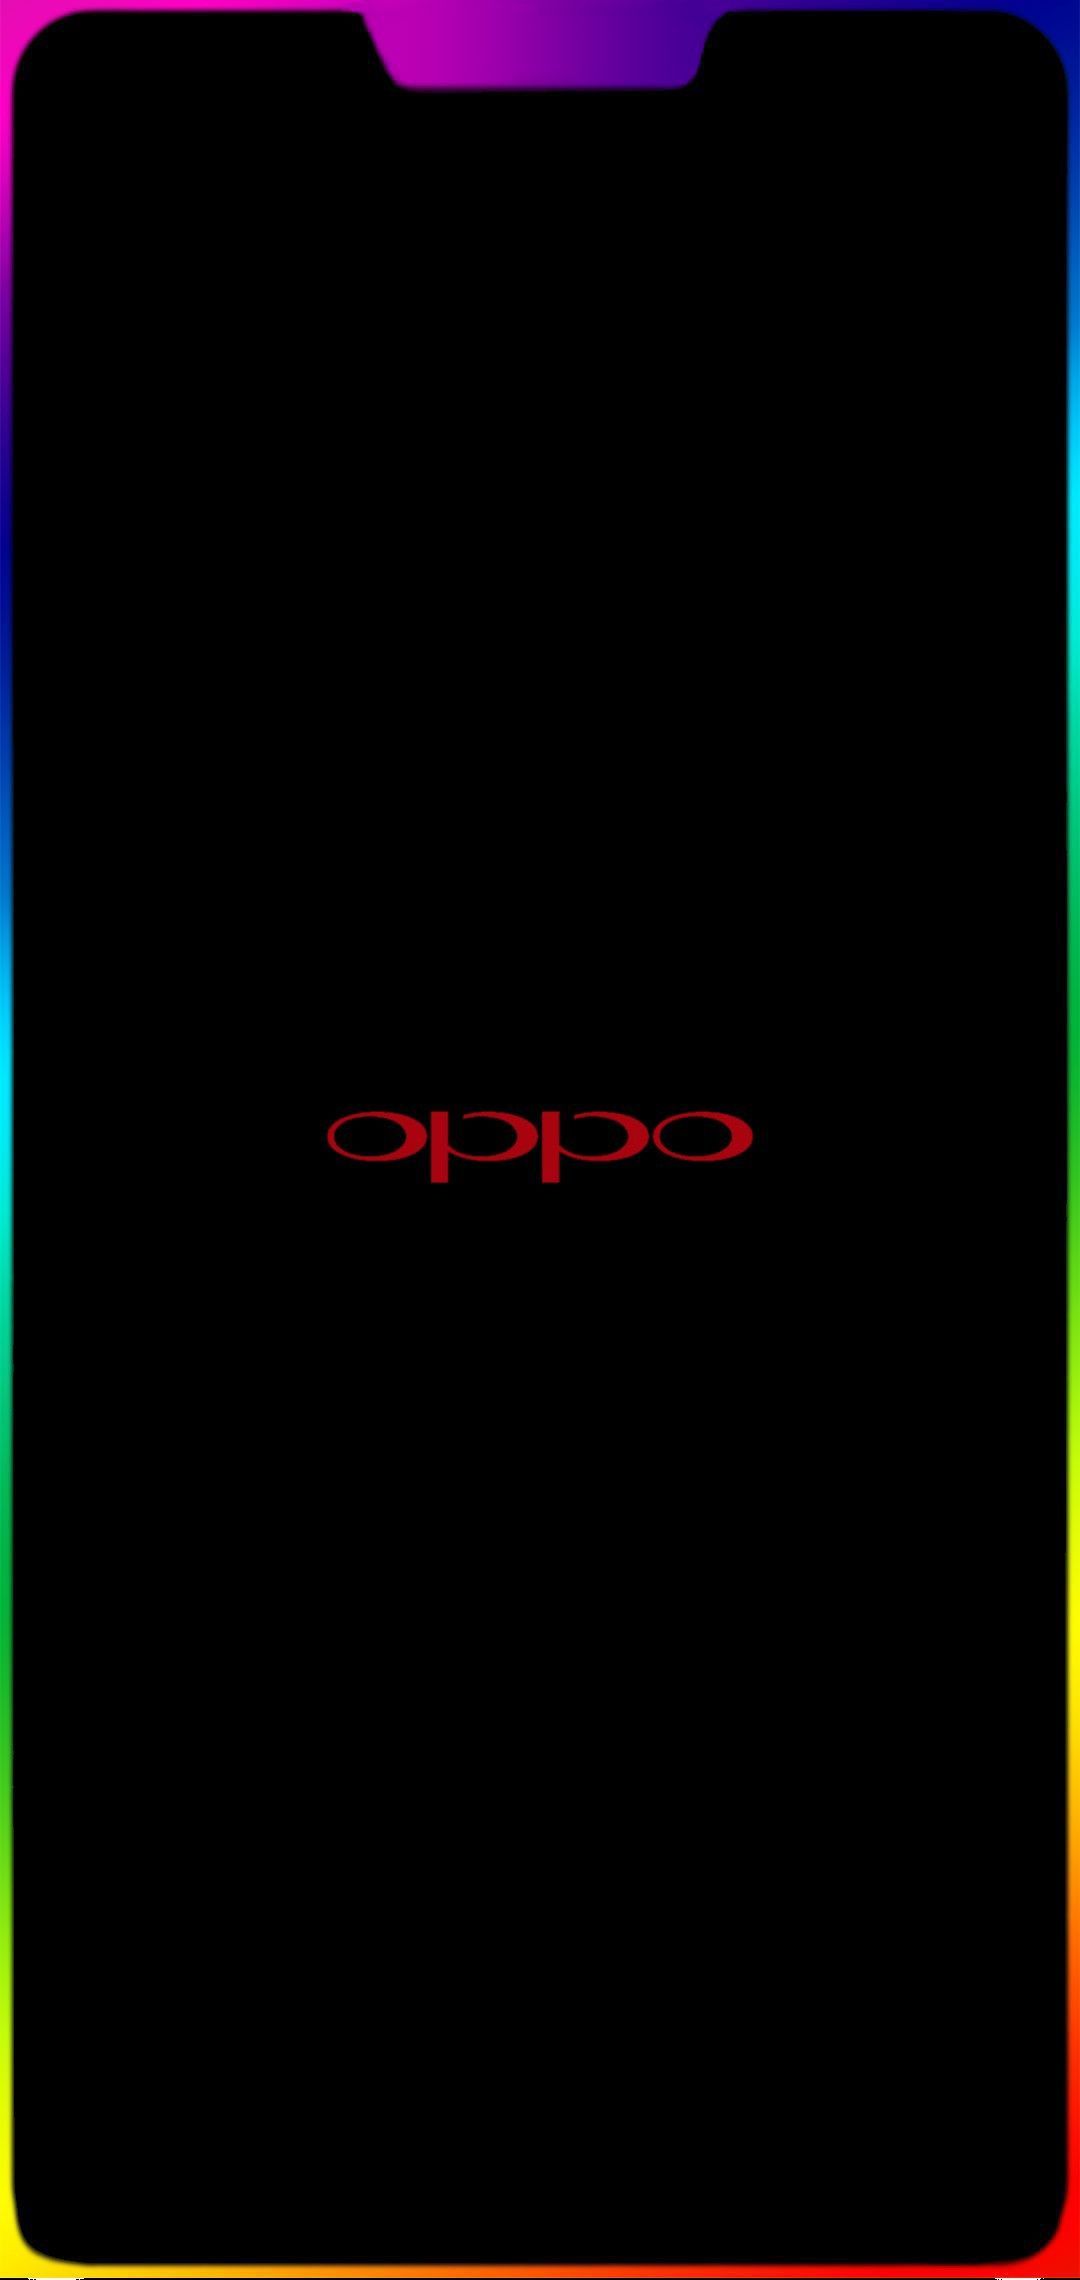 Oppo f7 notch border light red oppo 1080x2280. Samsung wallpaper